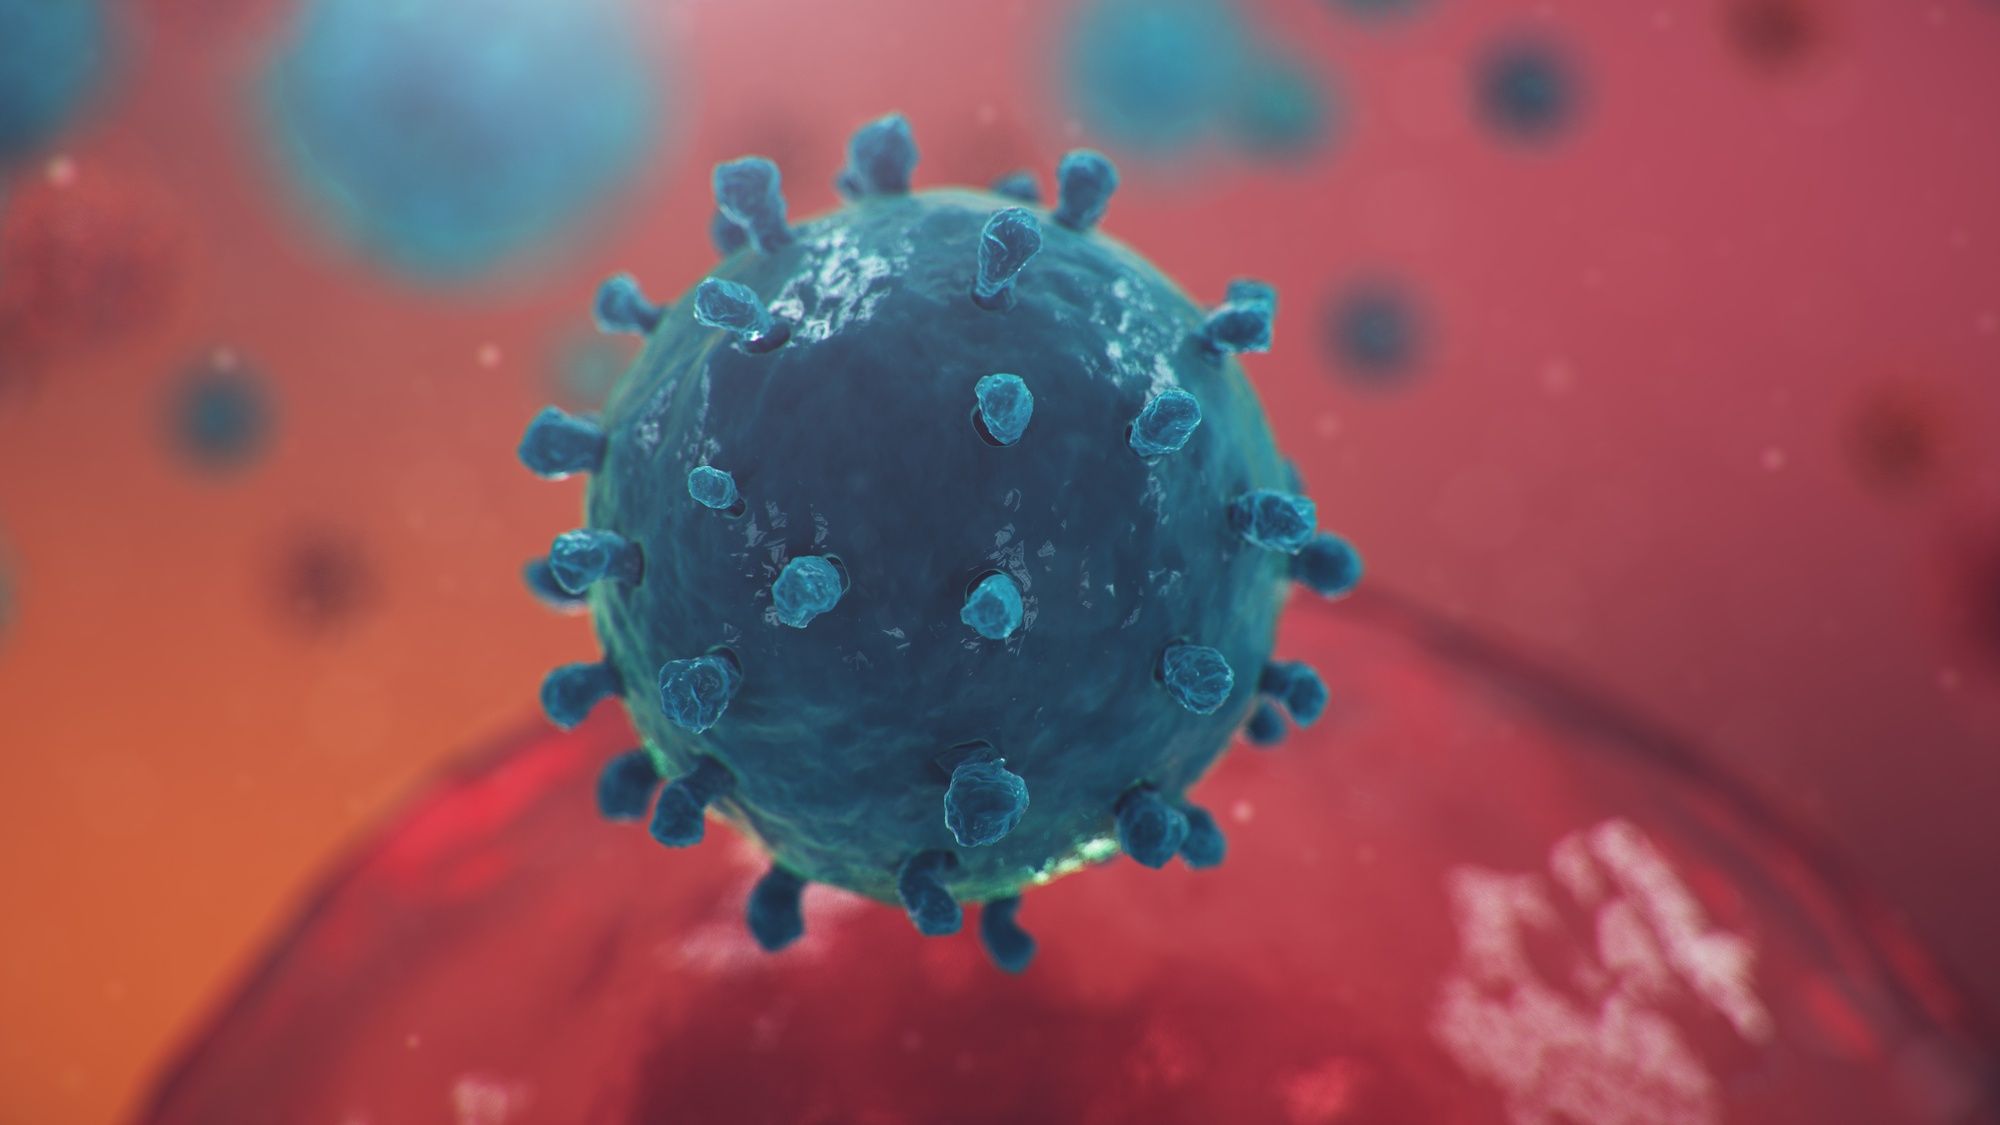 Virus image regarding the new strain of COVID detected 